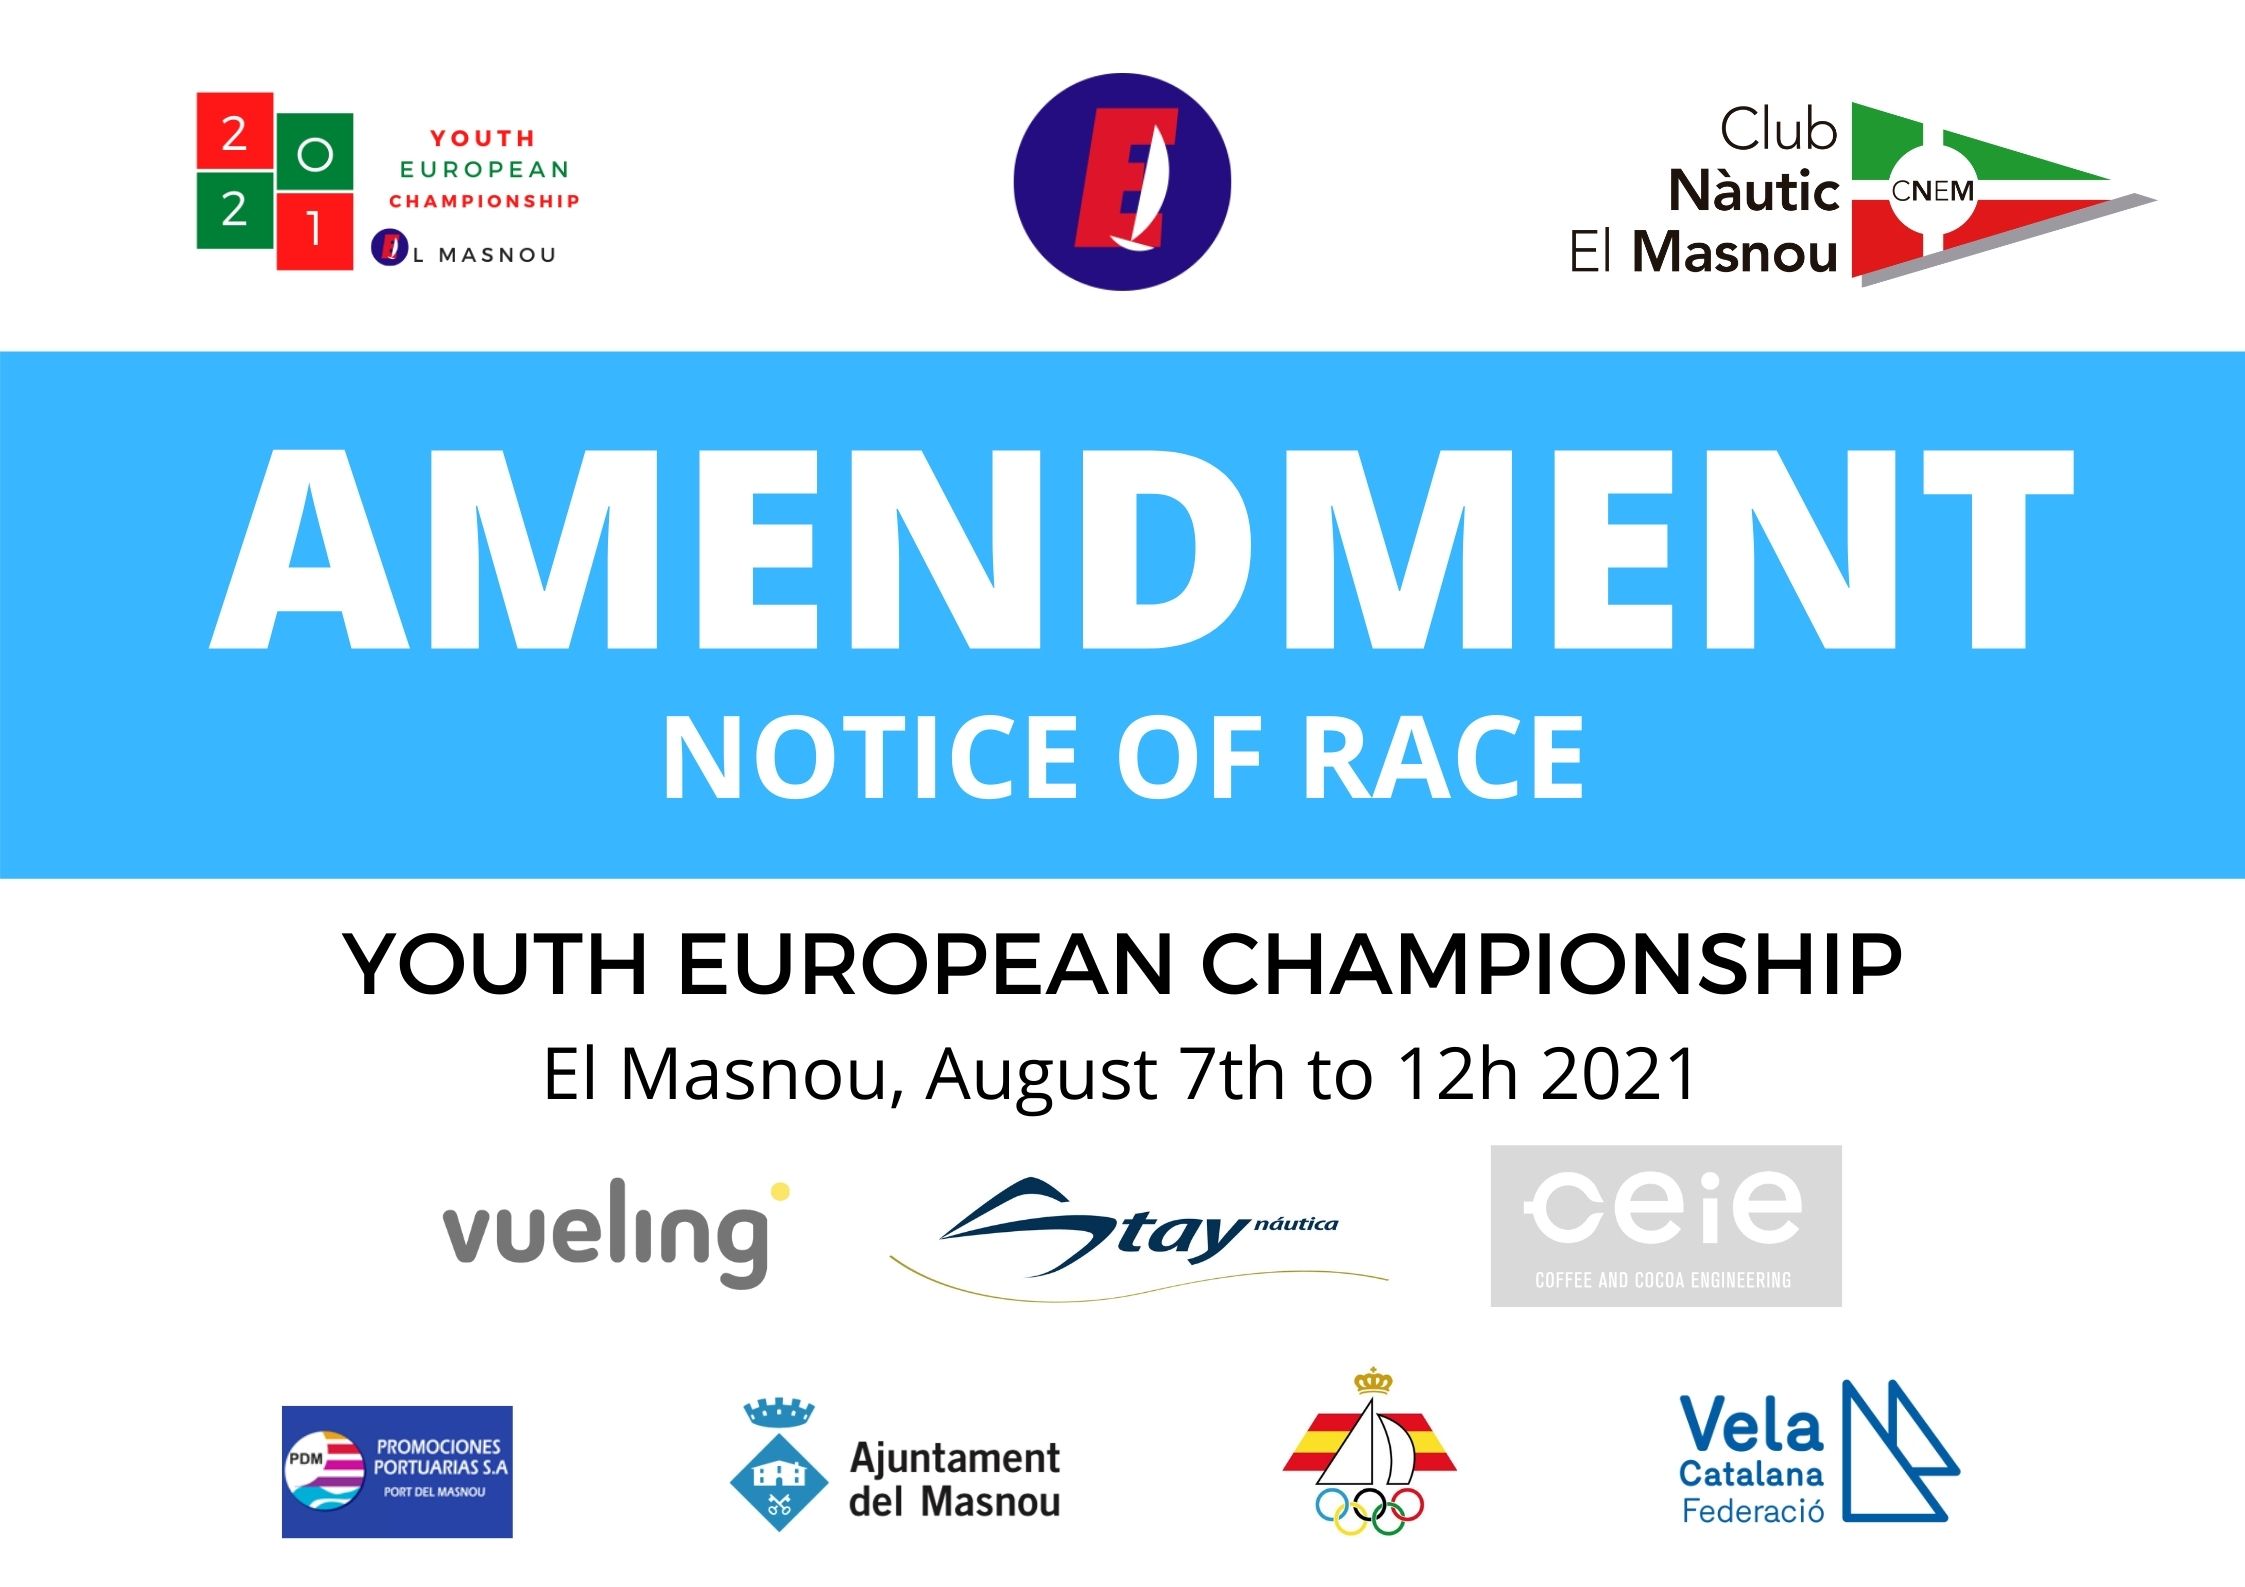 AMENDMENT NoR1 of YOUTH EUROPEAN CHAMPIONSHIP Published - El Masnou, Europa, Youth European Championship - YOUTH EUROPEAN CHAMPIONSHIP 2021